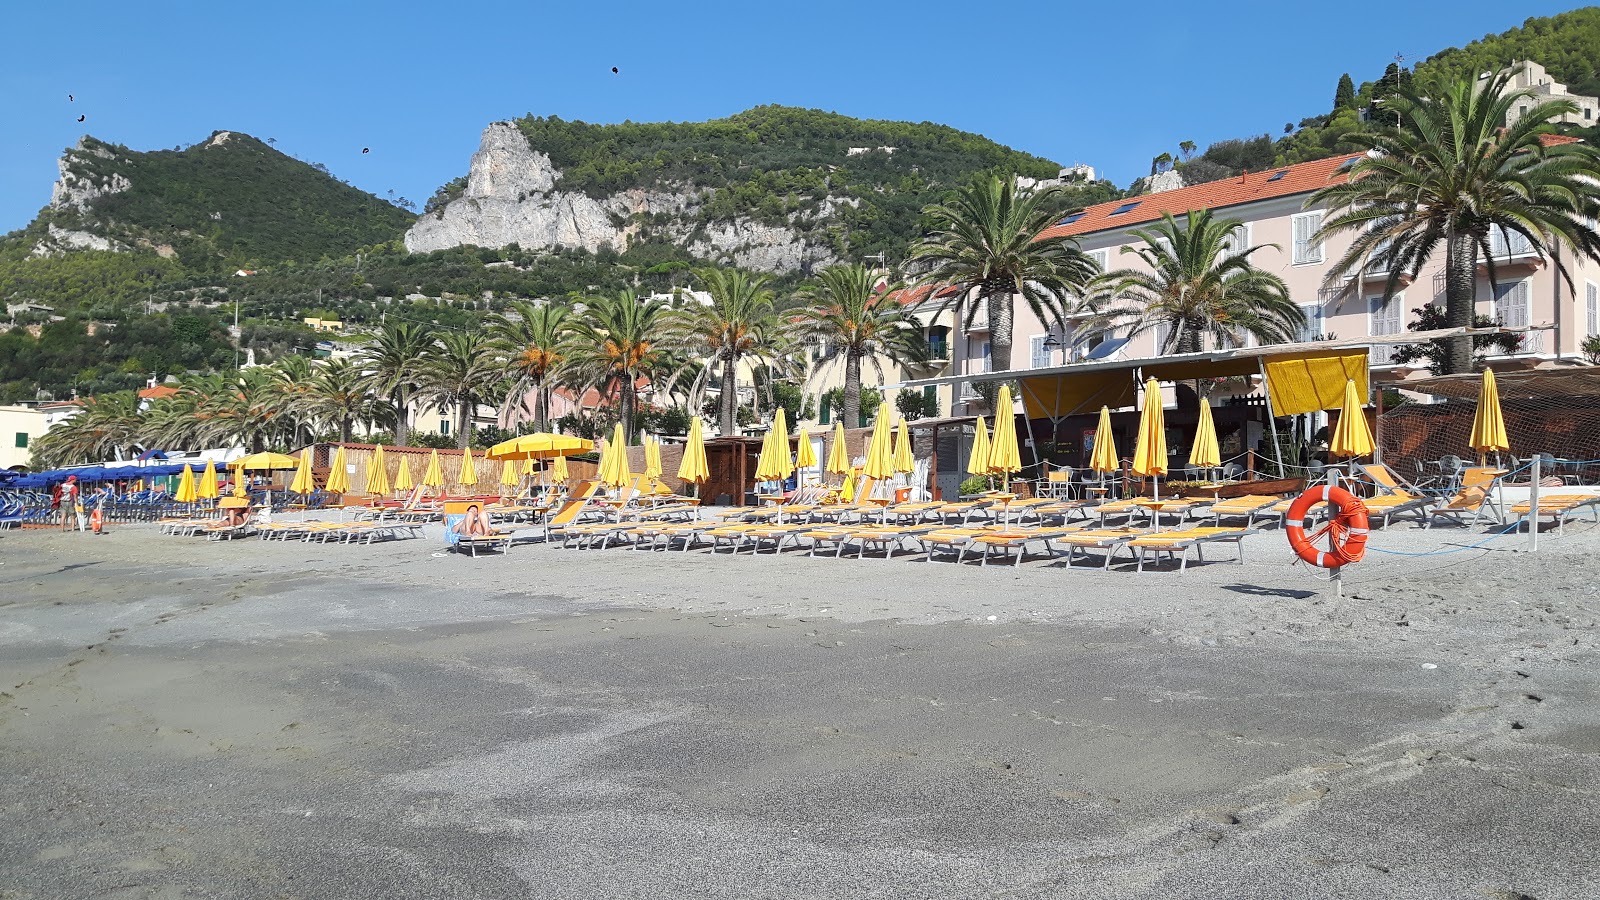 Foto de Spiaggia libera di Varigotti - lugar popular entre los conocedores del relax